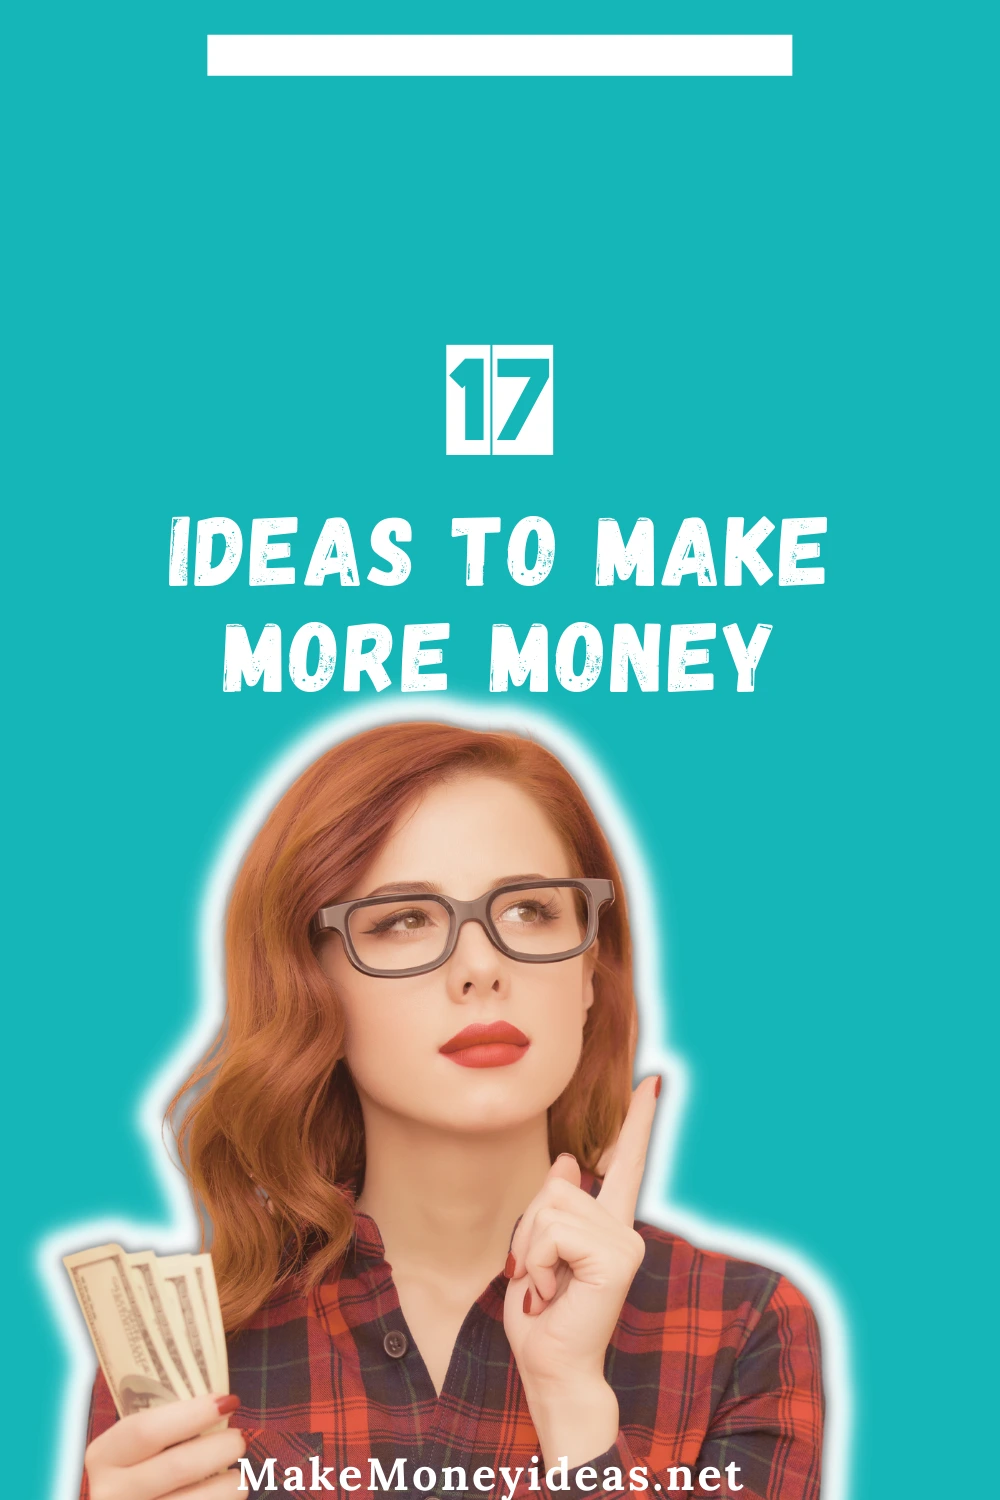 17 ideas to make more money